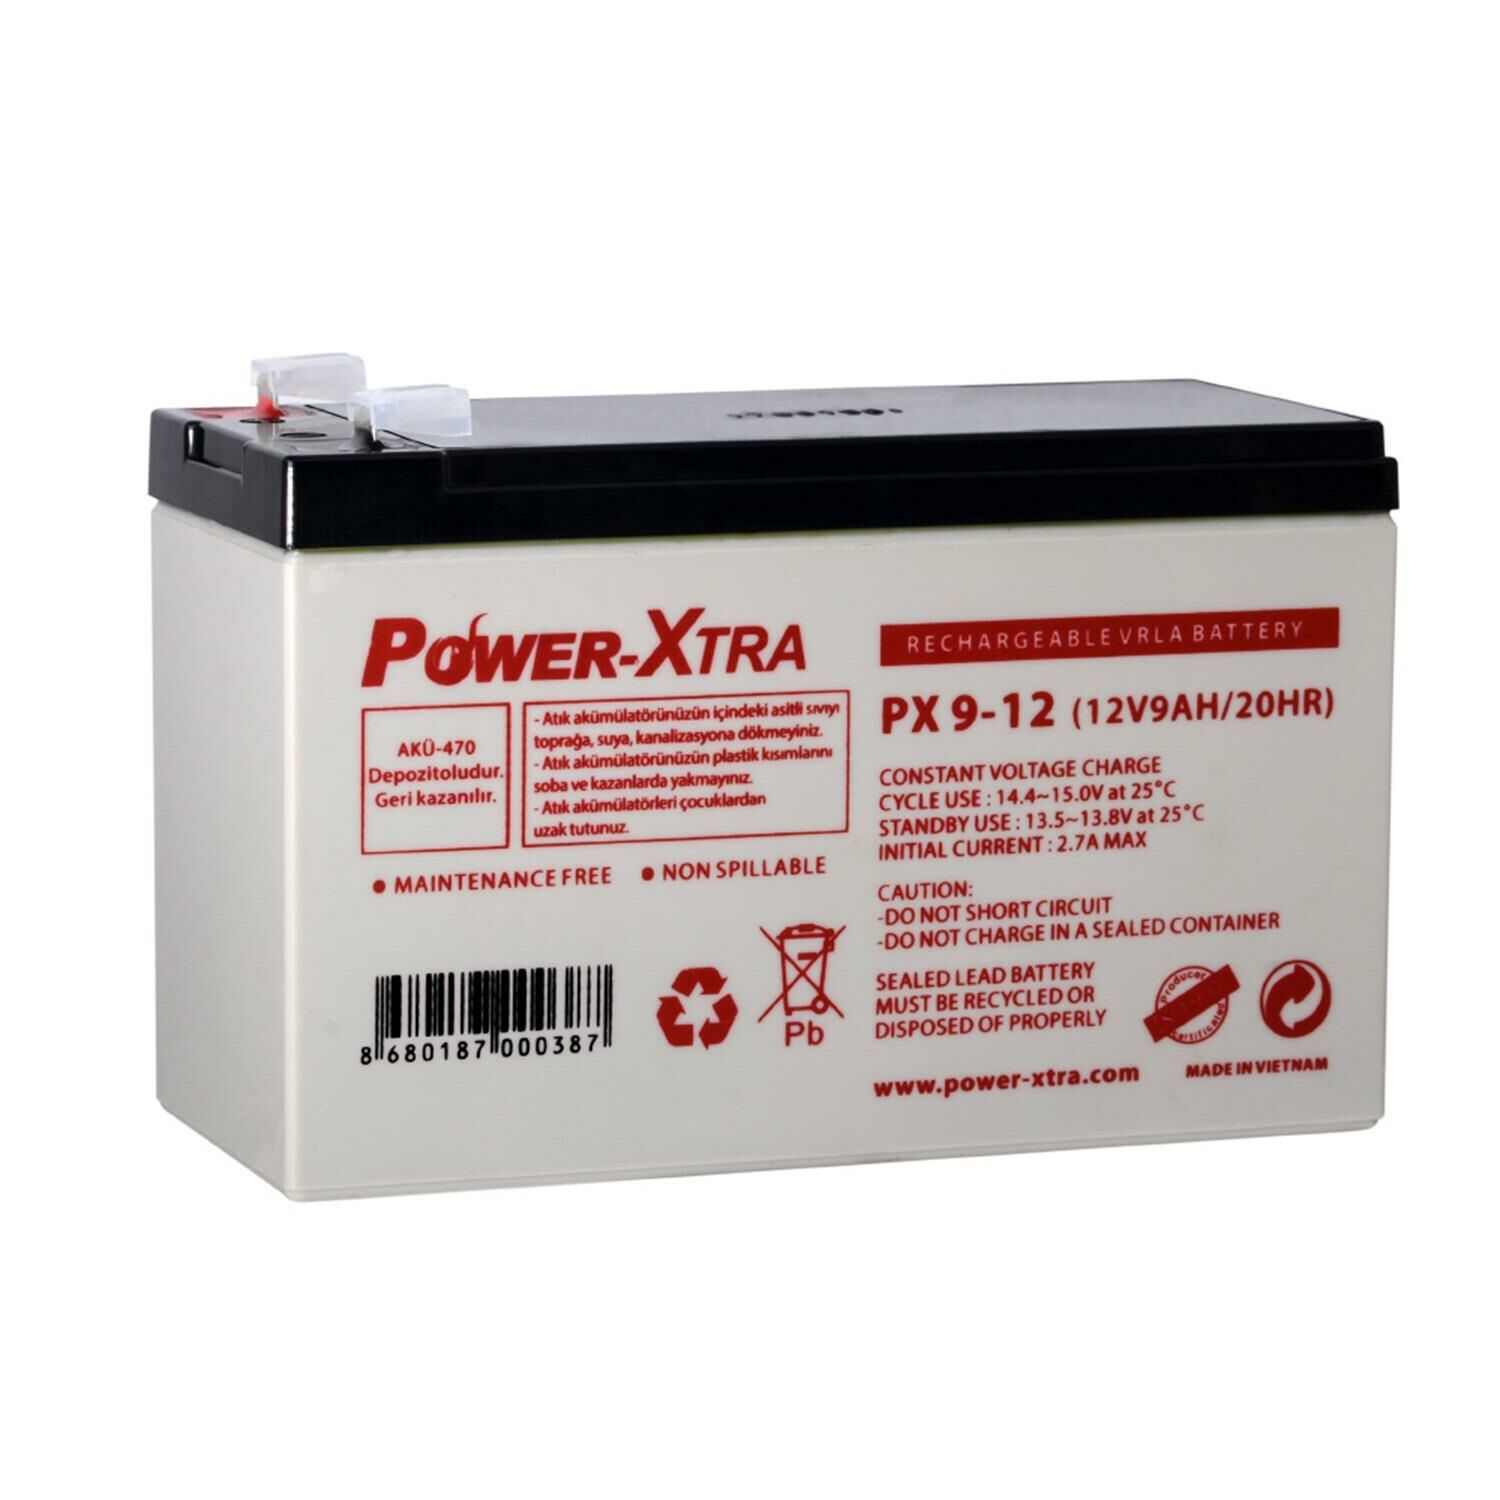 PowerXtra PX9-12 12V 9AH Bakımsız Kuru Akü